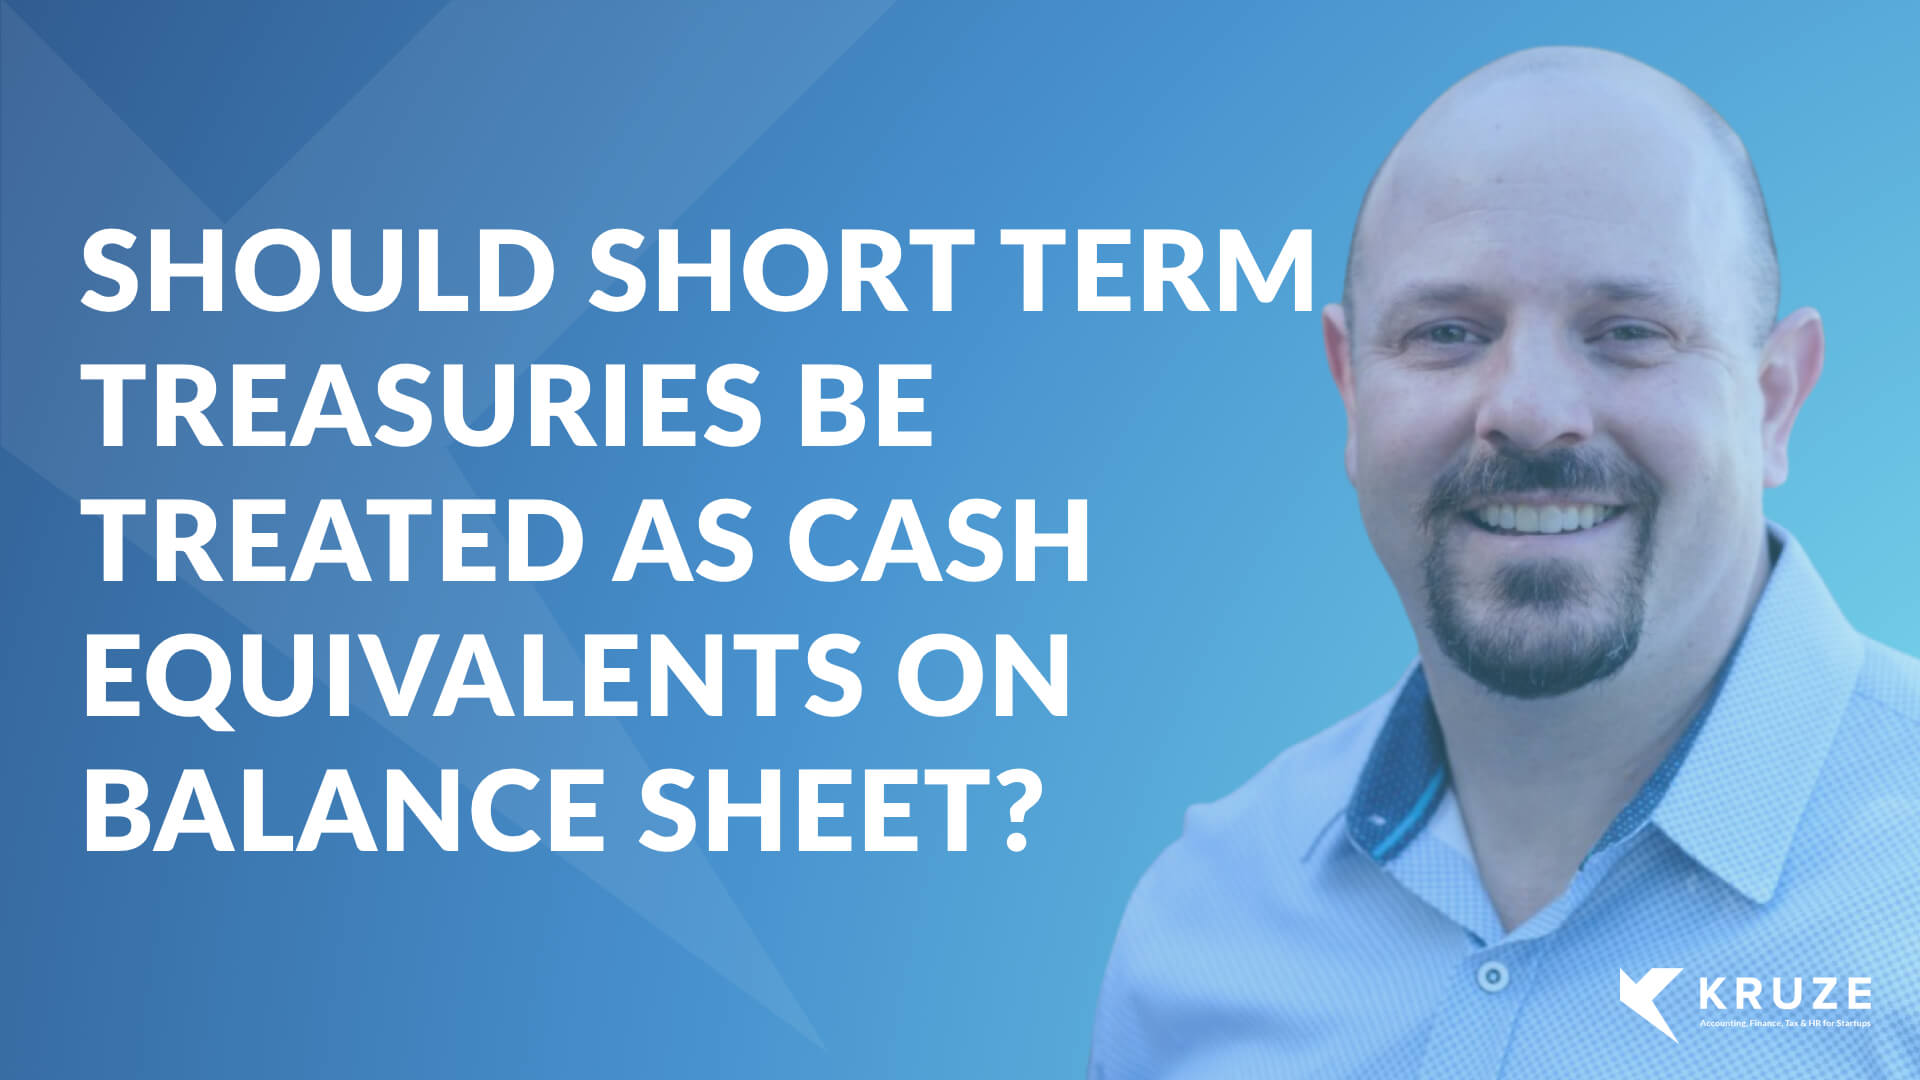 How to Treat Short-Term Treasuries on the Balance Sheet